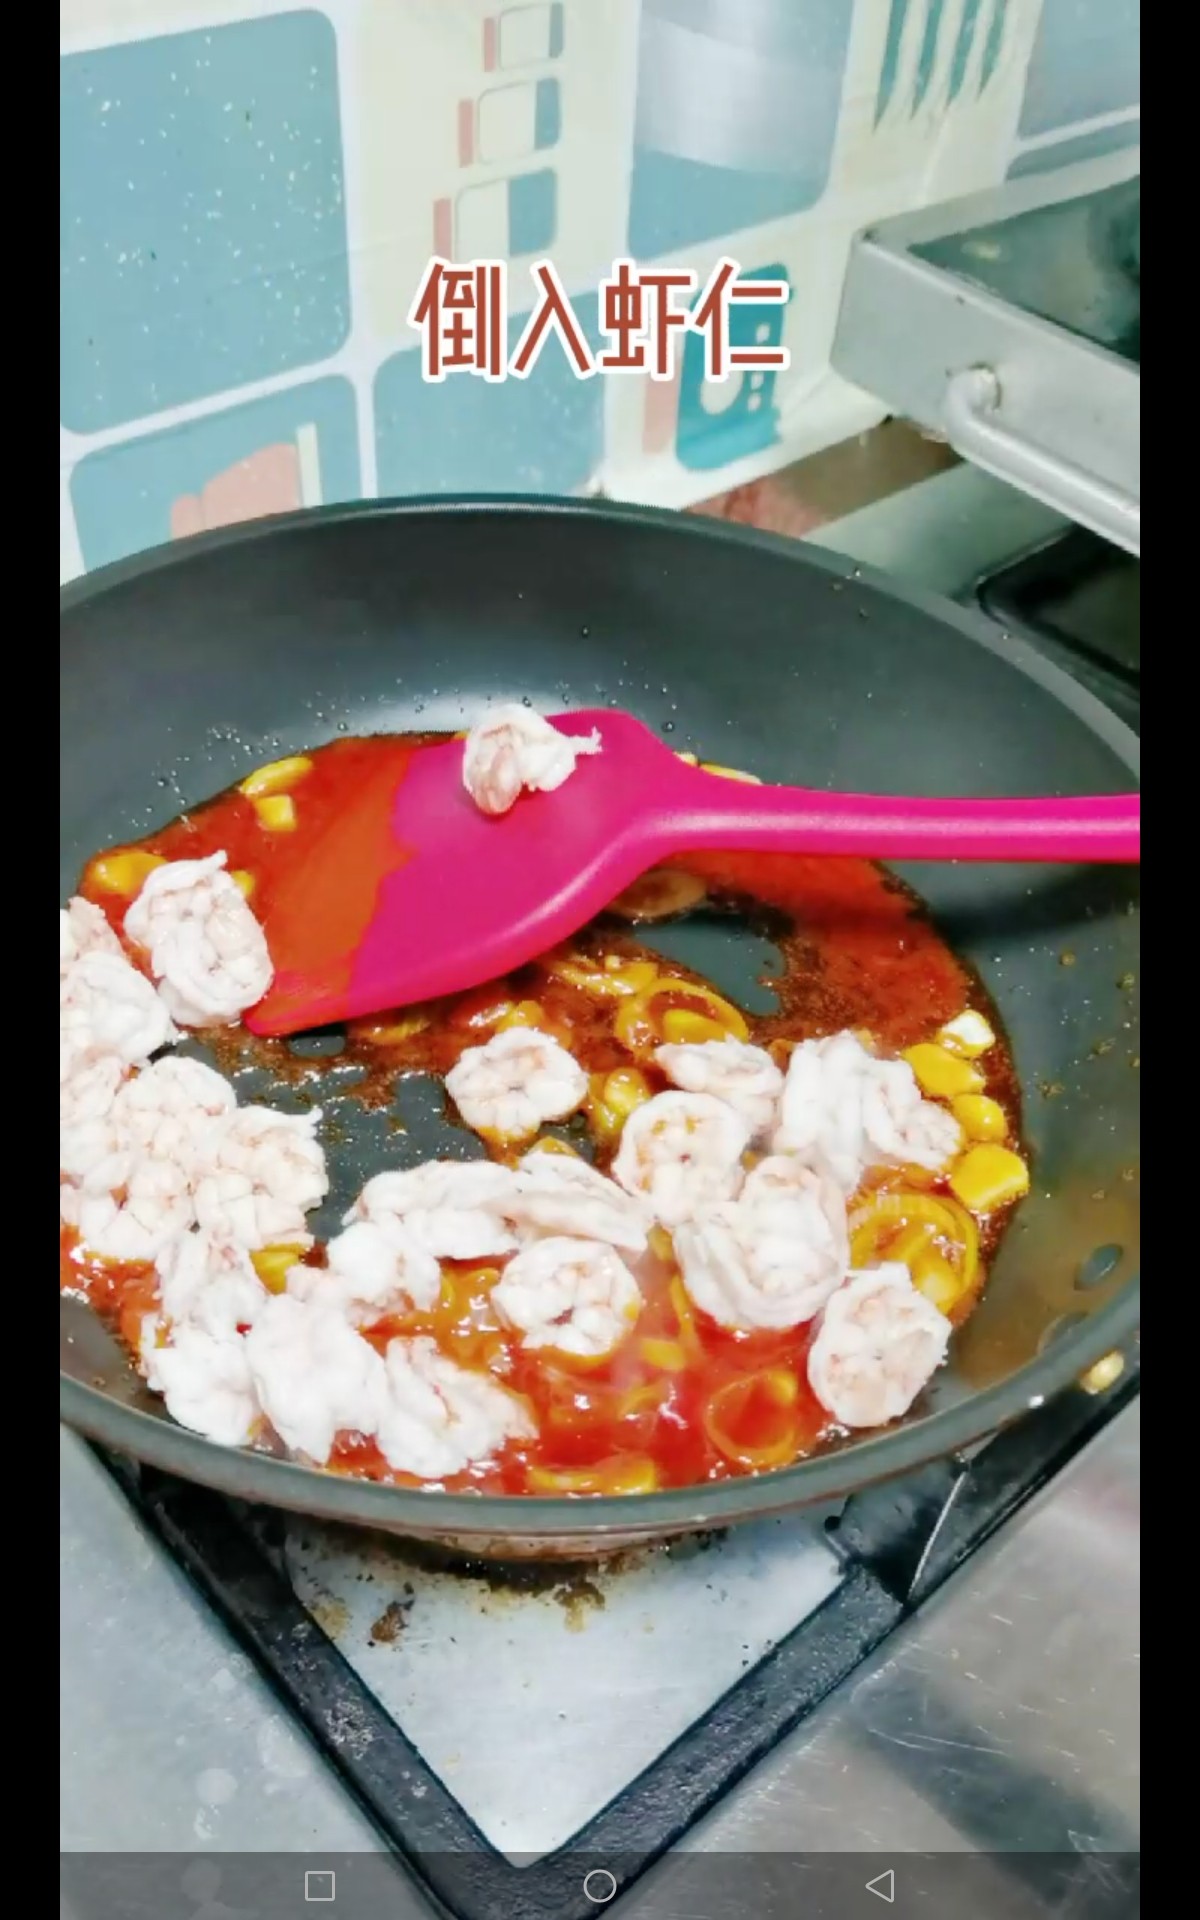 Shrimp in Tomato Sauce recipe